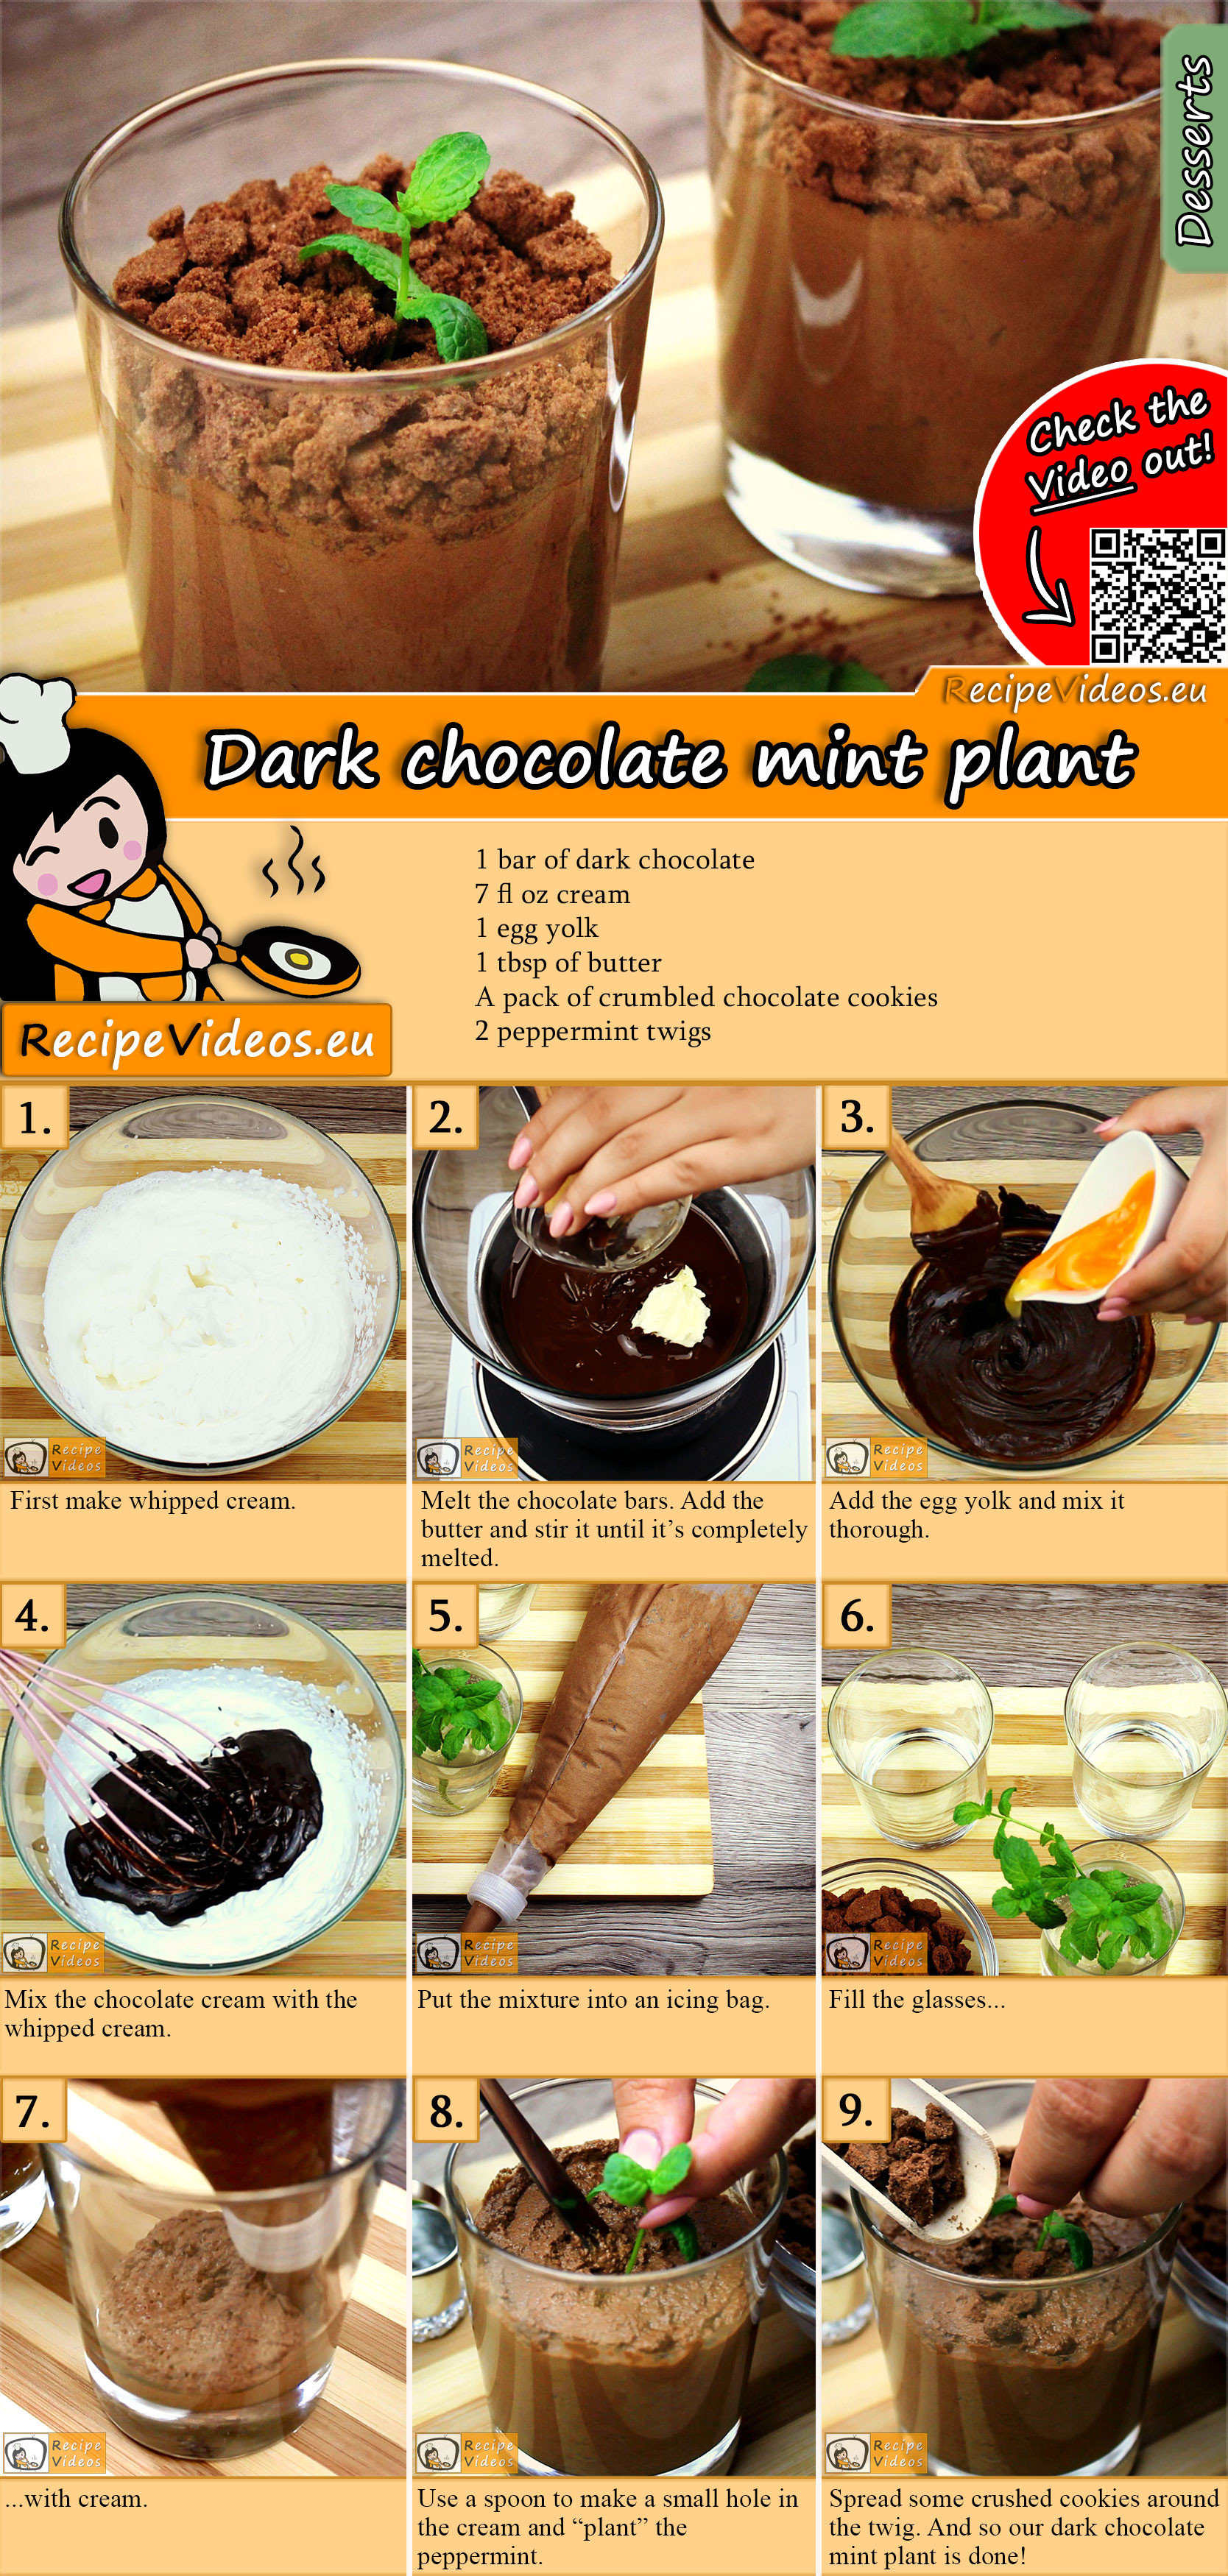 Dark chocolate mint plant recipe with video